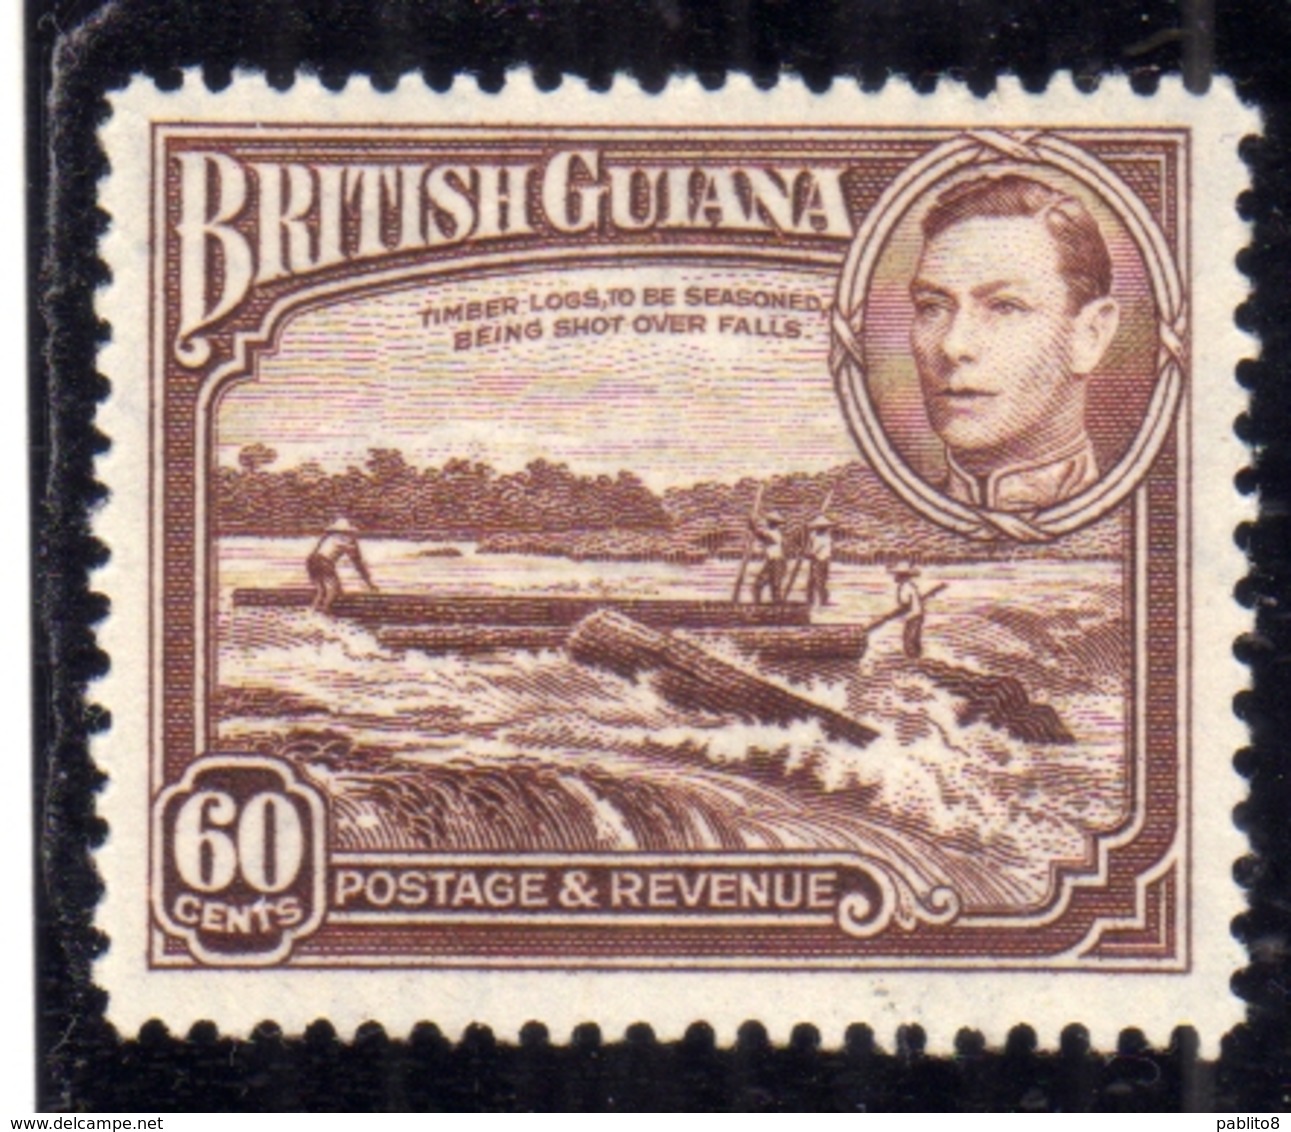 BRITISH GUIANA GUYANA BRITANNICA 1938 1952 KING GEORGE VI TIMBER LOGS TO BE SEASONED BEING SHOT OVER FALLS CENT. 60c MNH - Guyana Britannica (...-1966)